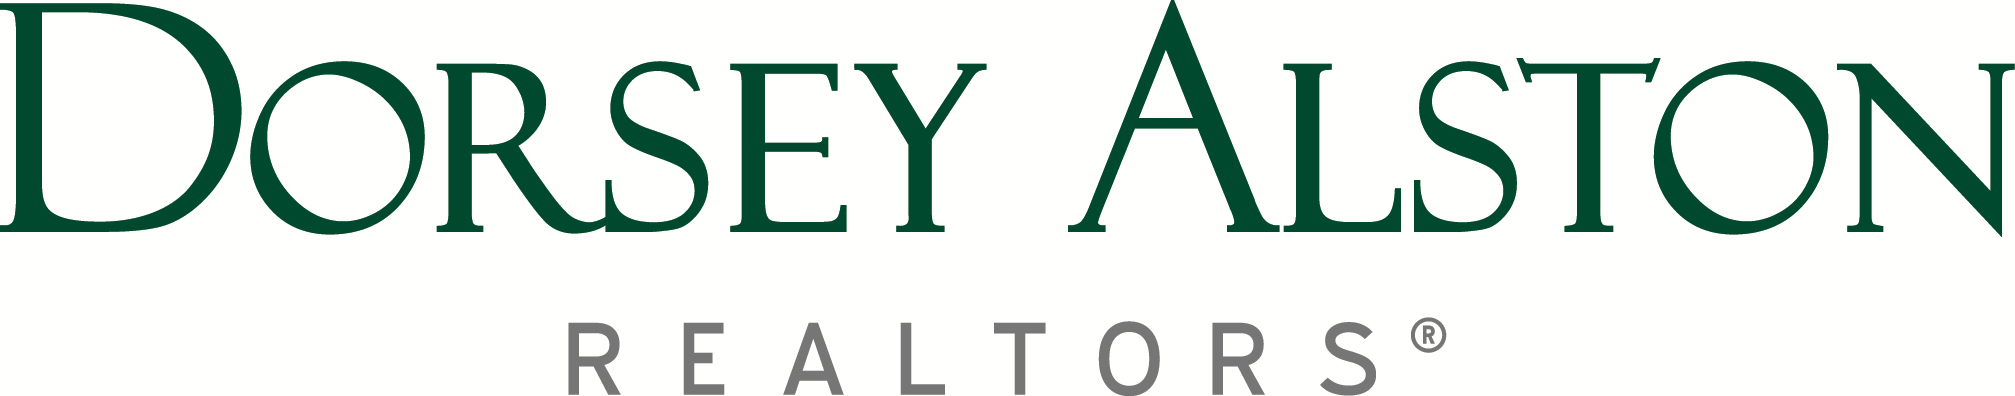 Dorsey Alston, Realtors logo